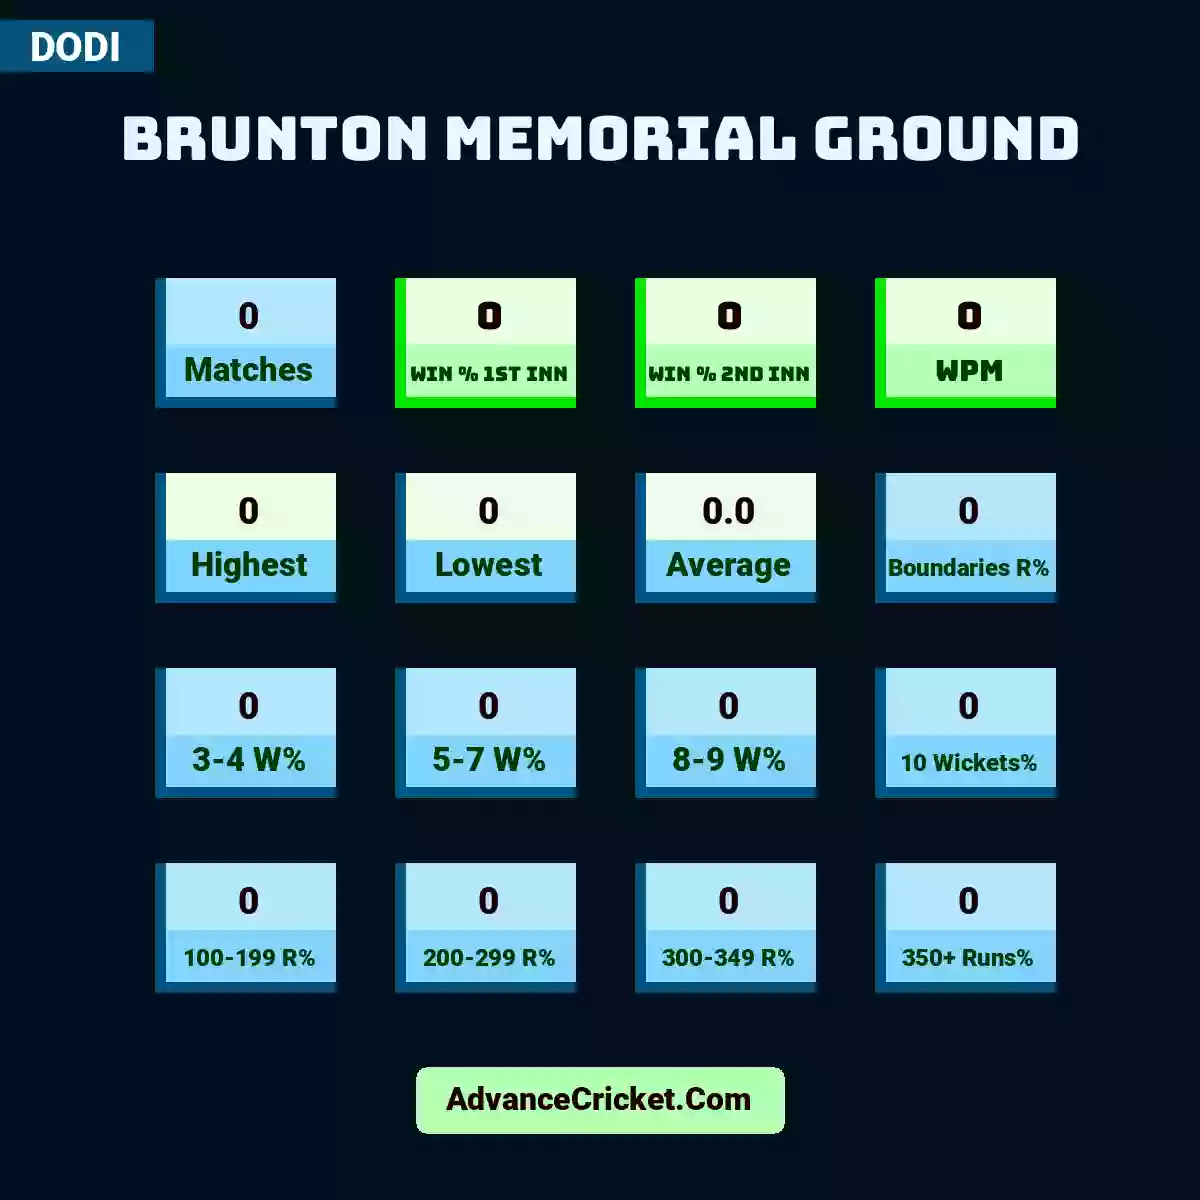 Image showing Brunton Memorial Ground with Matches: 0, Win % 1st Inn: 0, Win % 2nd Inn: 0, WPM: 0, Highest: 0, Lowest: 0, Average: 0.0, Boundaries R%: 0, 3-4 W%: 0, 5-7 W%: 0, 8-9 W%: 0, 10 Wickets%: 0, 100-199 R%: 0, 200-299 R%: 0, 300-349 R%: 0, 350+ Runs%: 0.